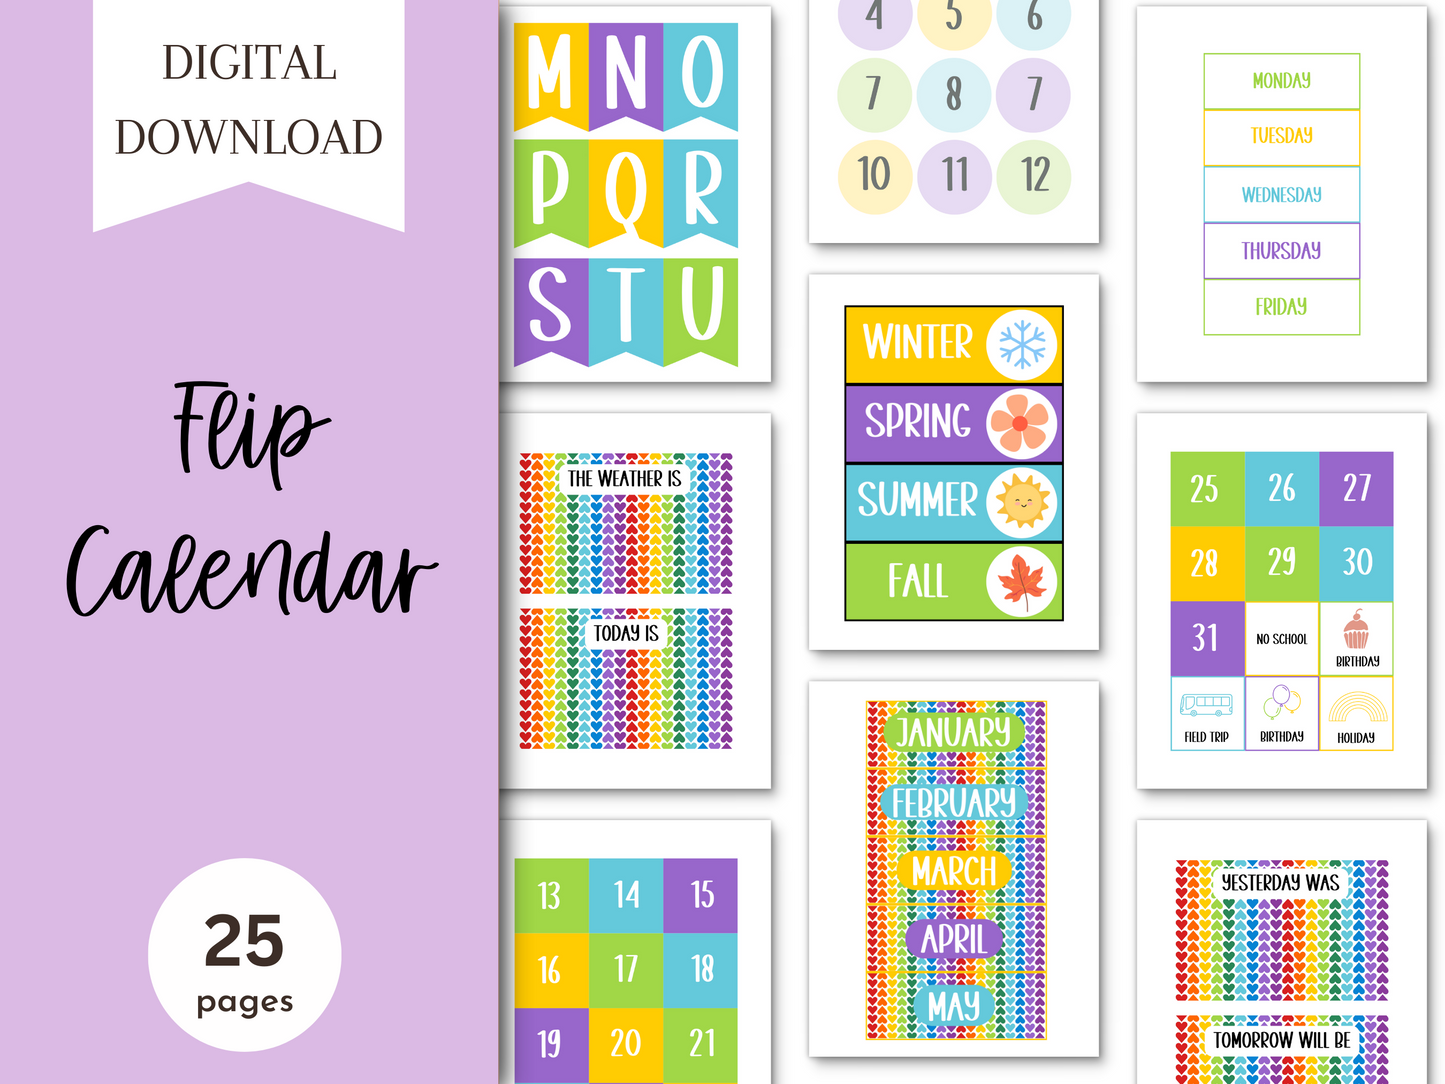 Rainbow Hearts Classroom Flip Calendar